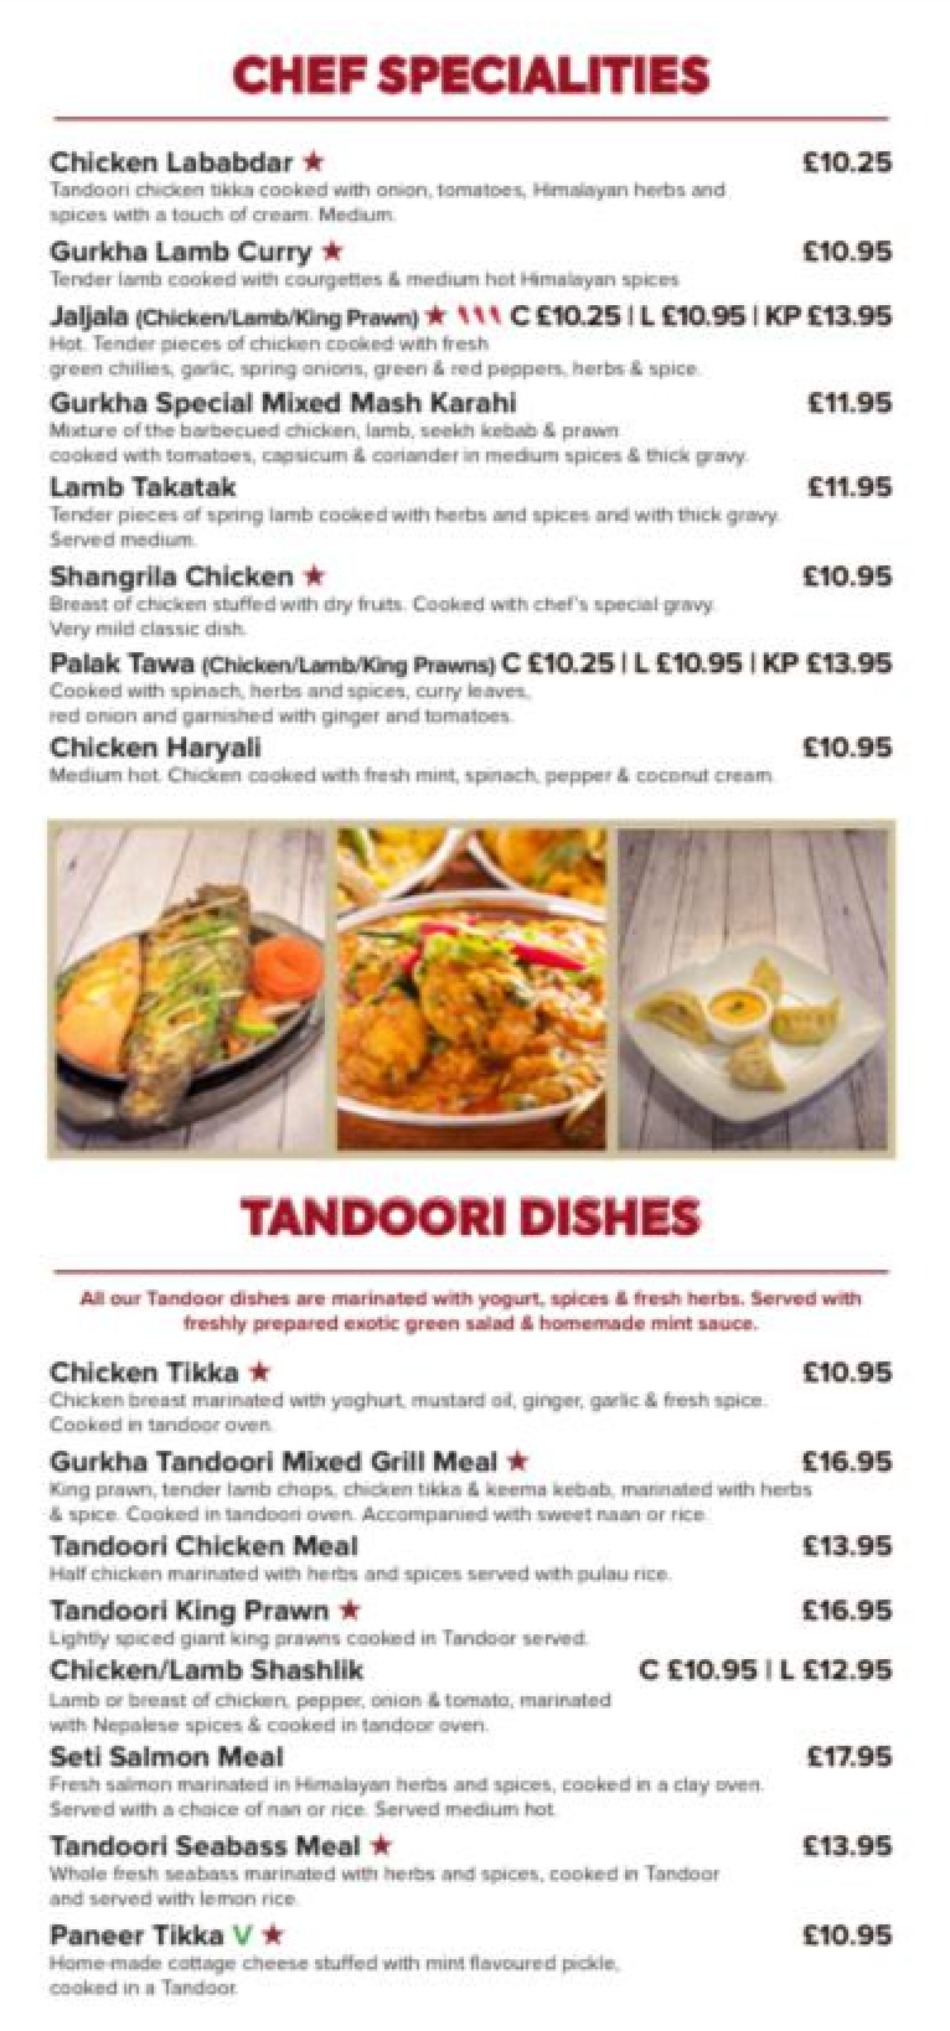 Takeaway Restaurant Menu Page - Gurkha Village Nepalese and Indian cuisine - Kidlington